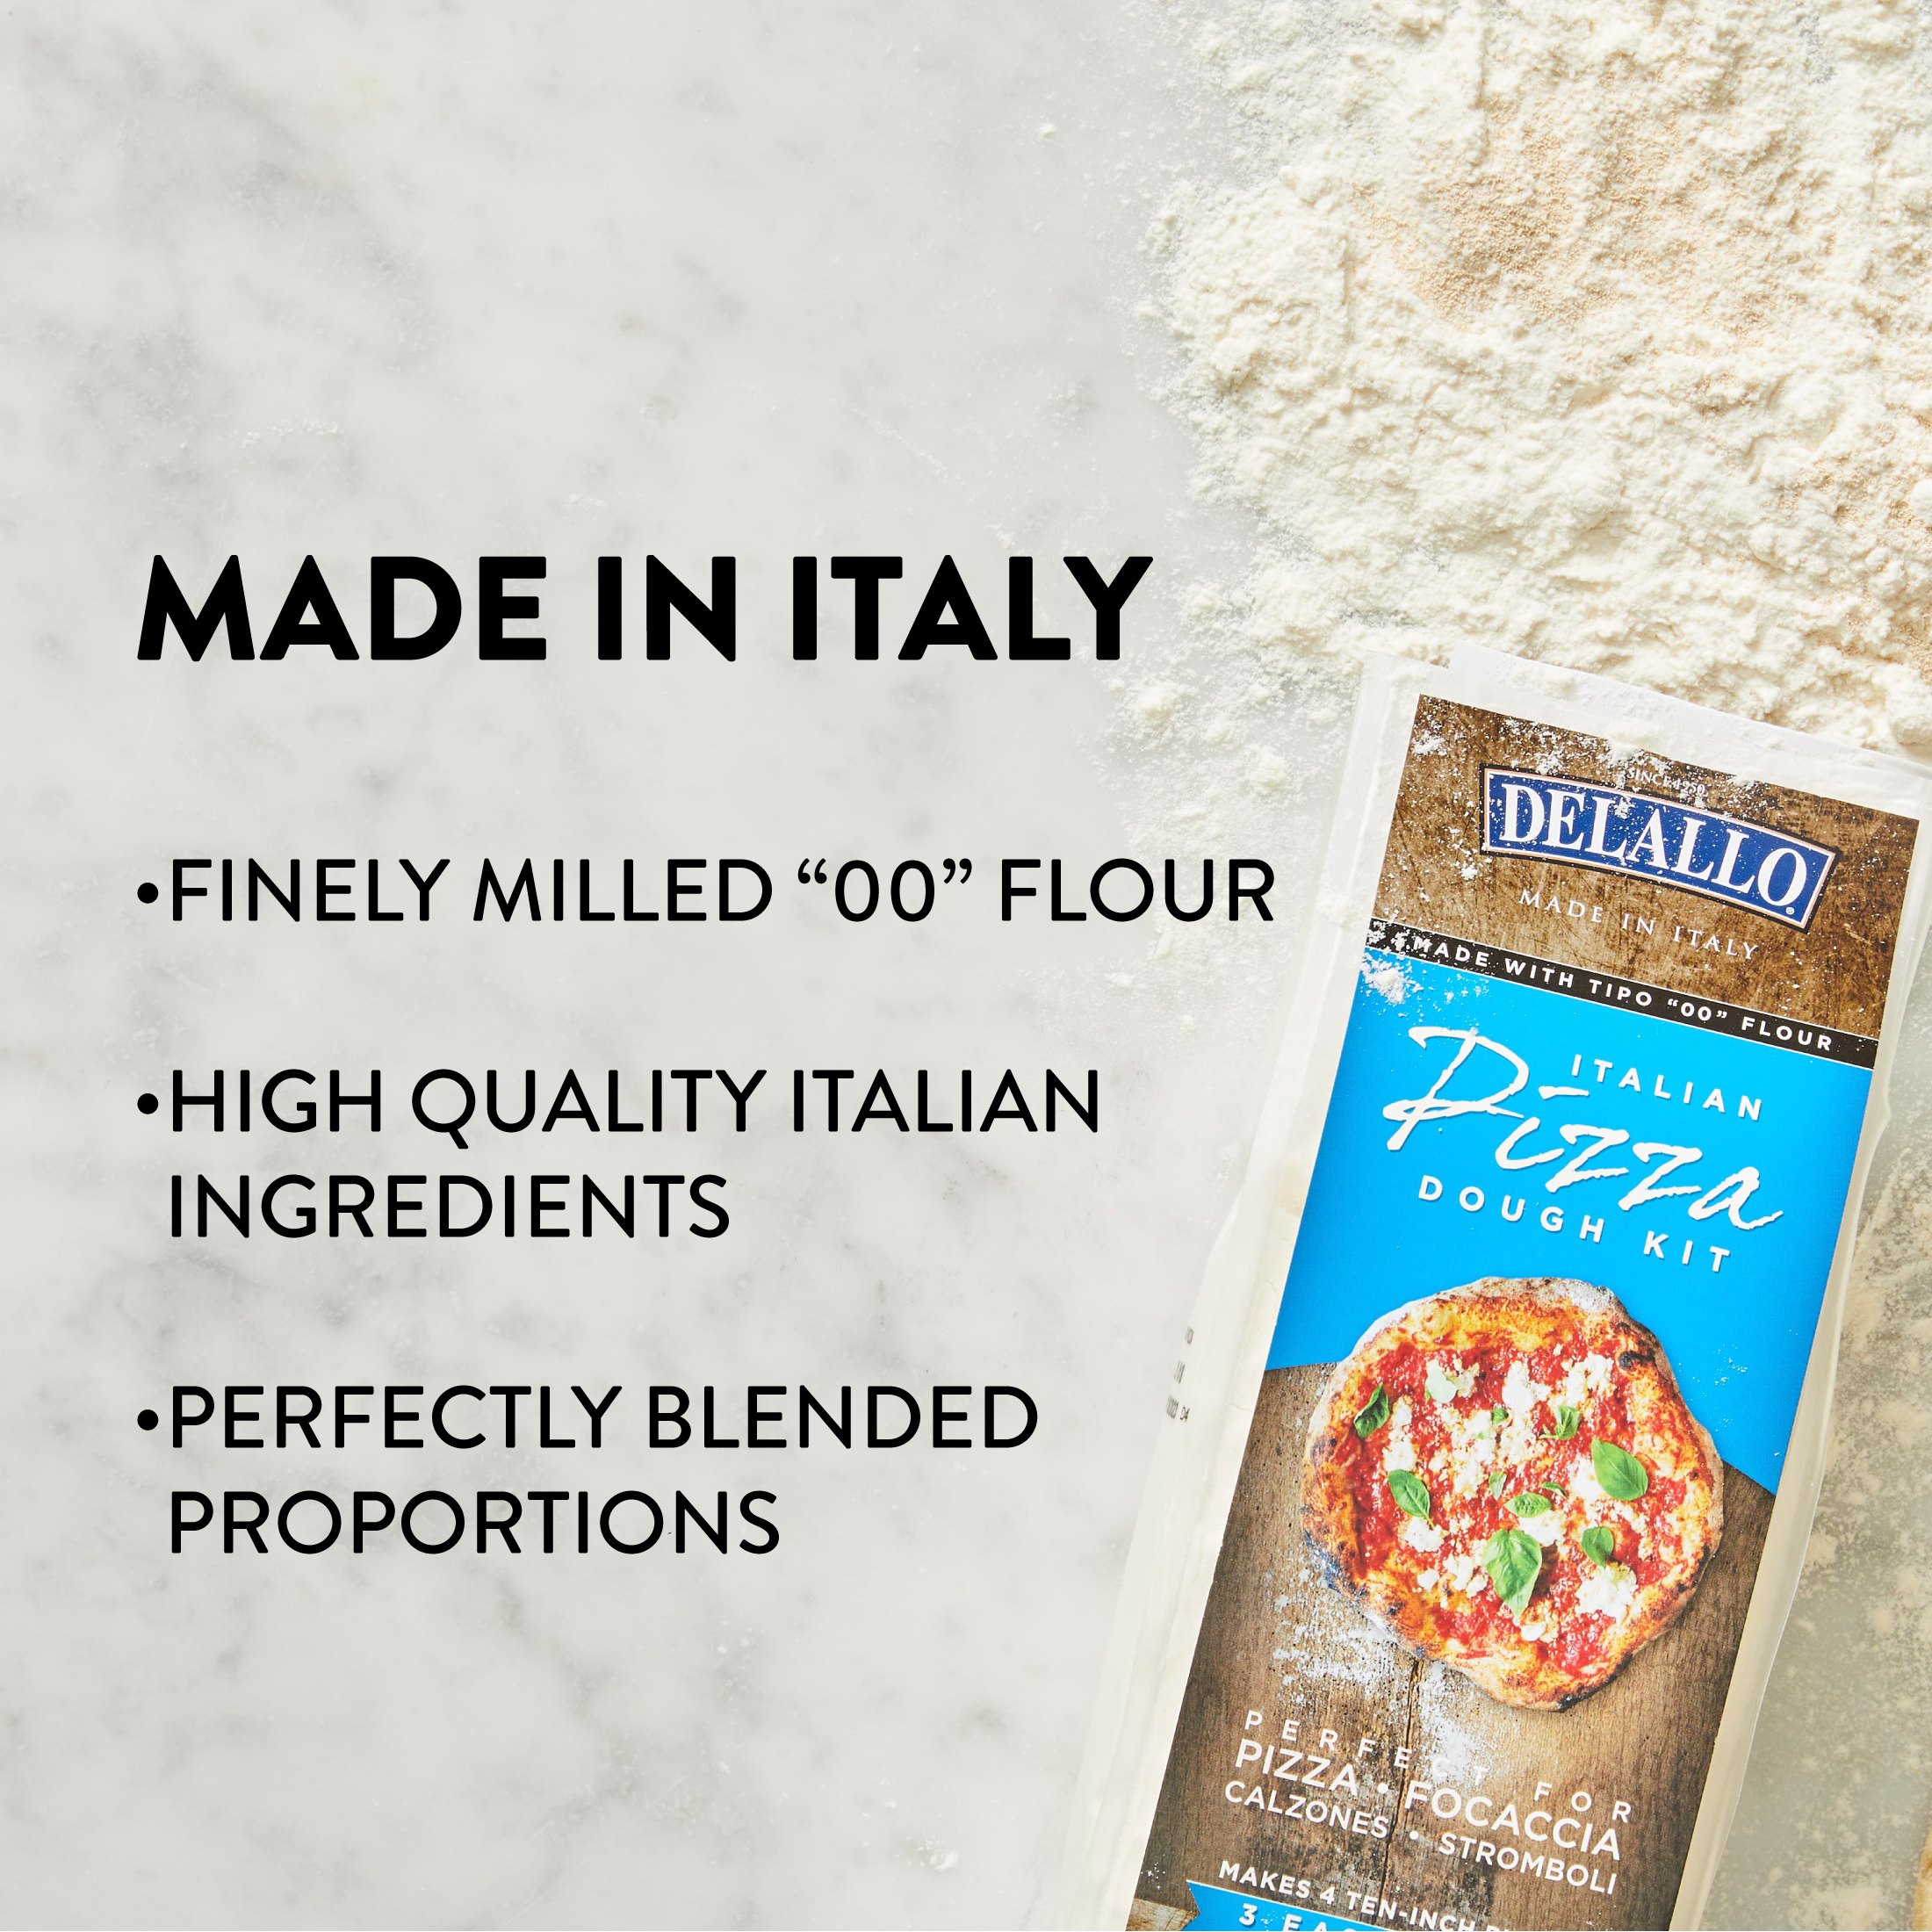 DeLallo Pizza Dough Kit, Italian Pizzeria-Style Crust Mix, Shelf Stable, 17.6 oz Bag - image 2 of 9